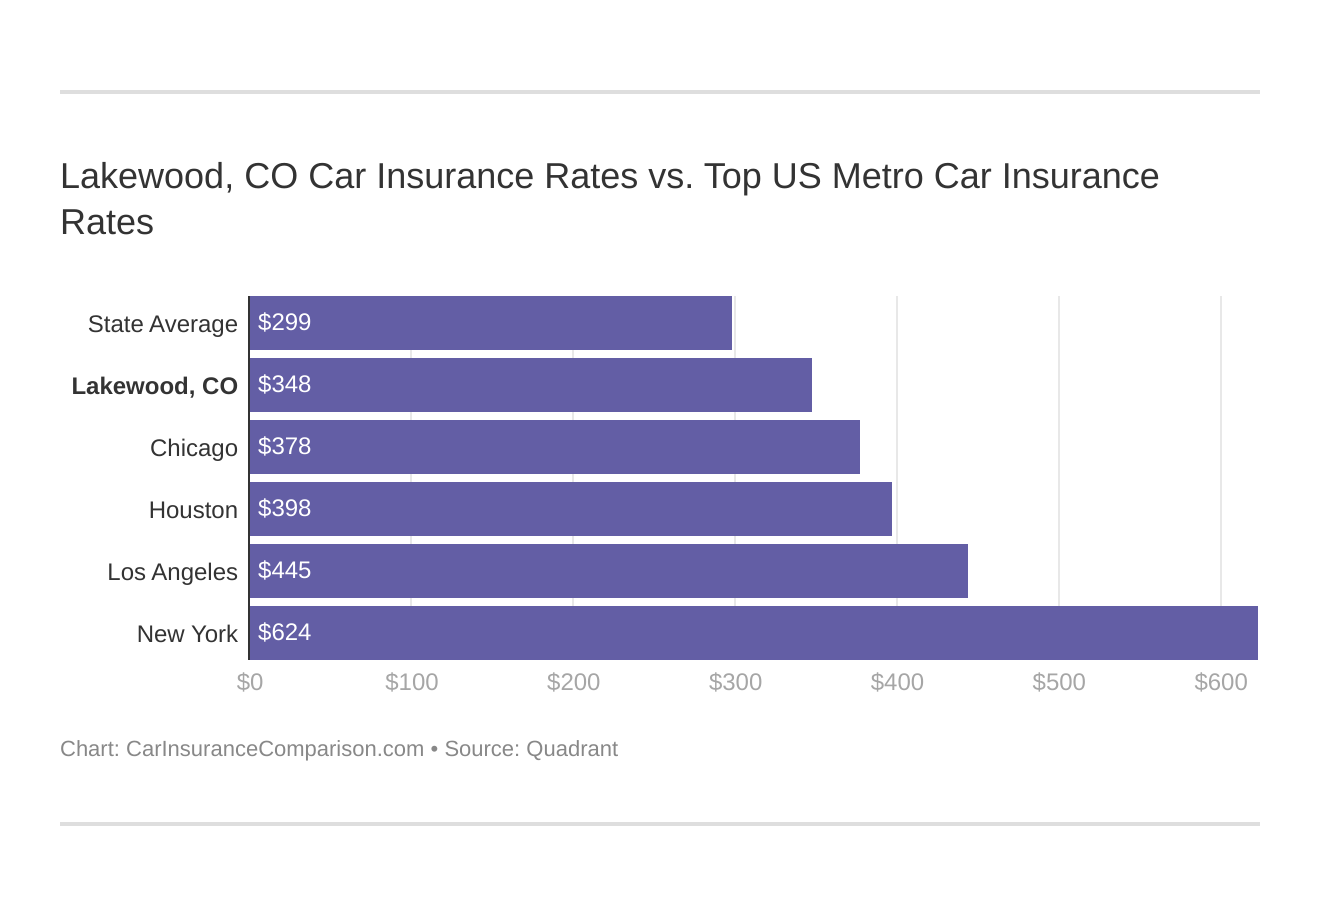 Lakewood, CO Car Insurance Rates vs. Top US Metro Car Insurance Rates